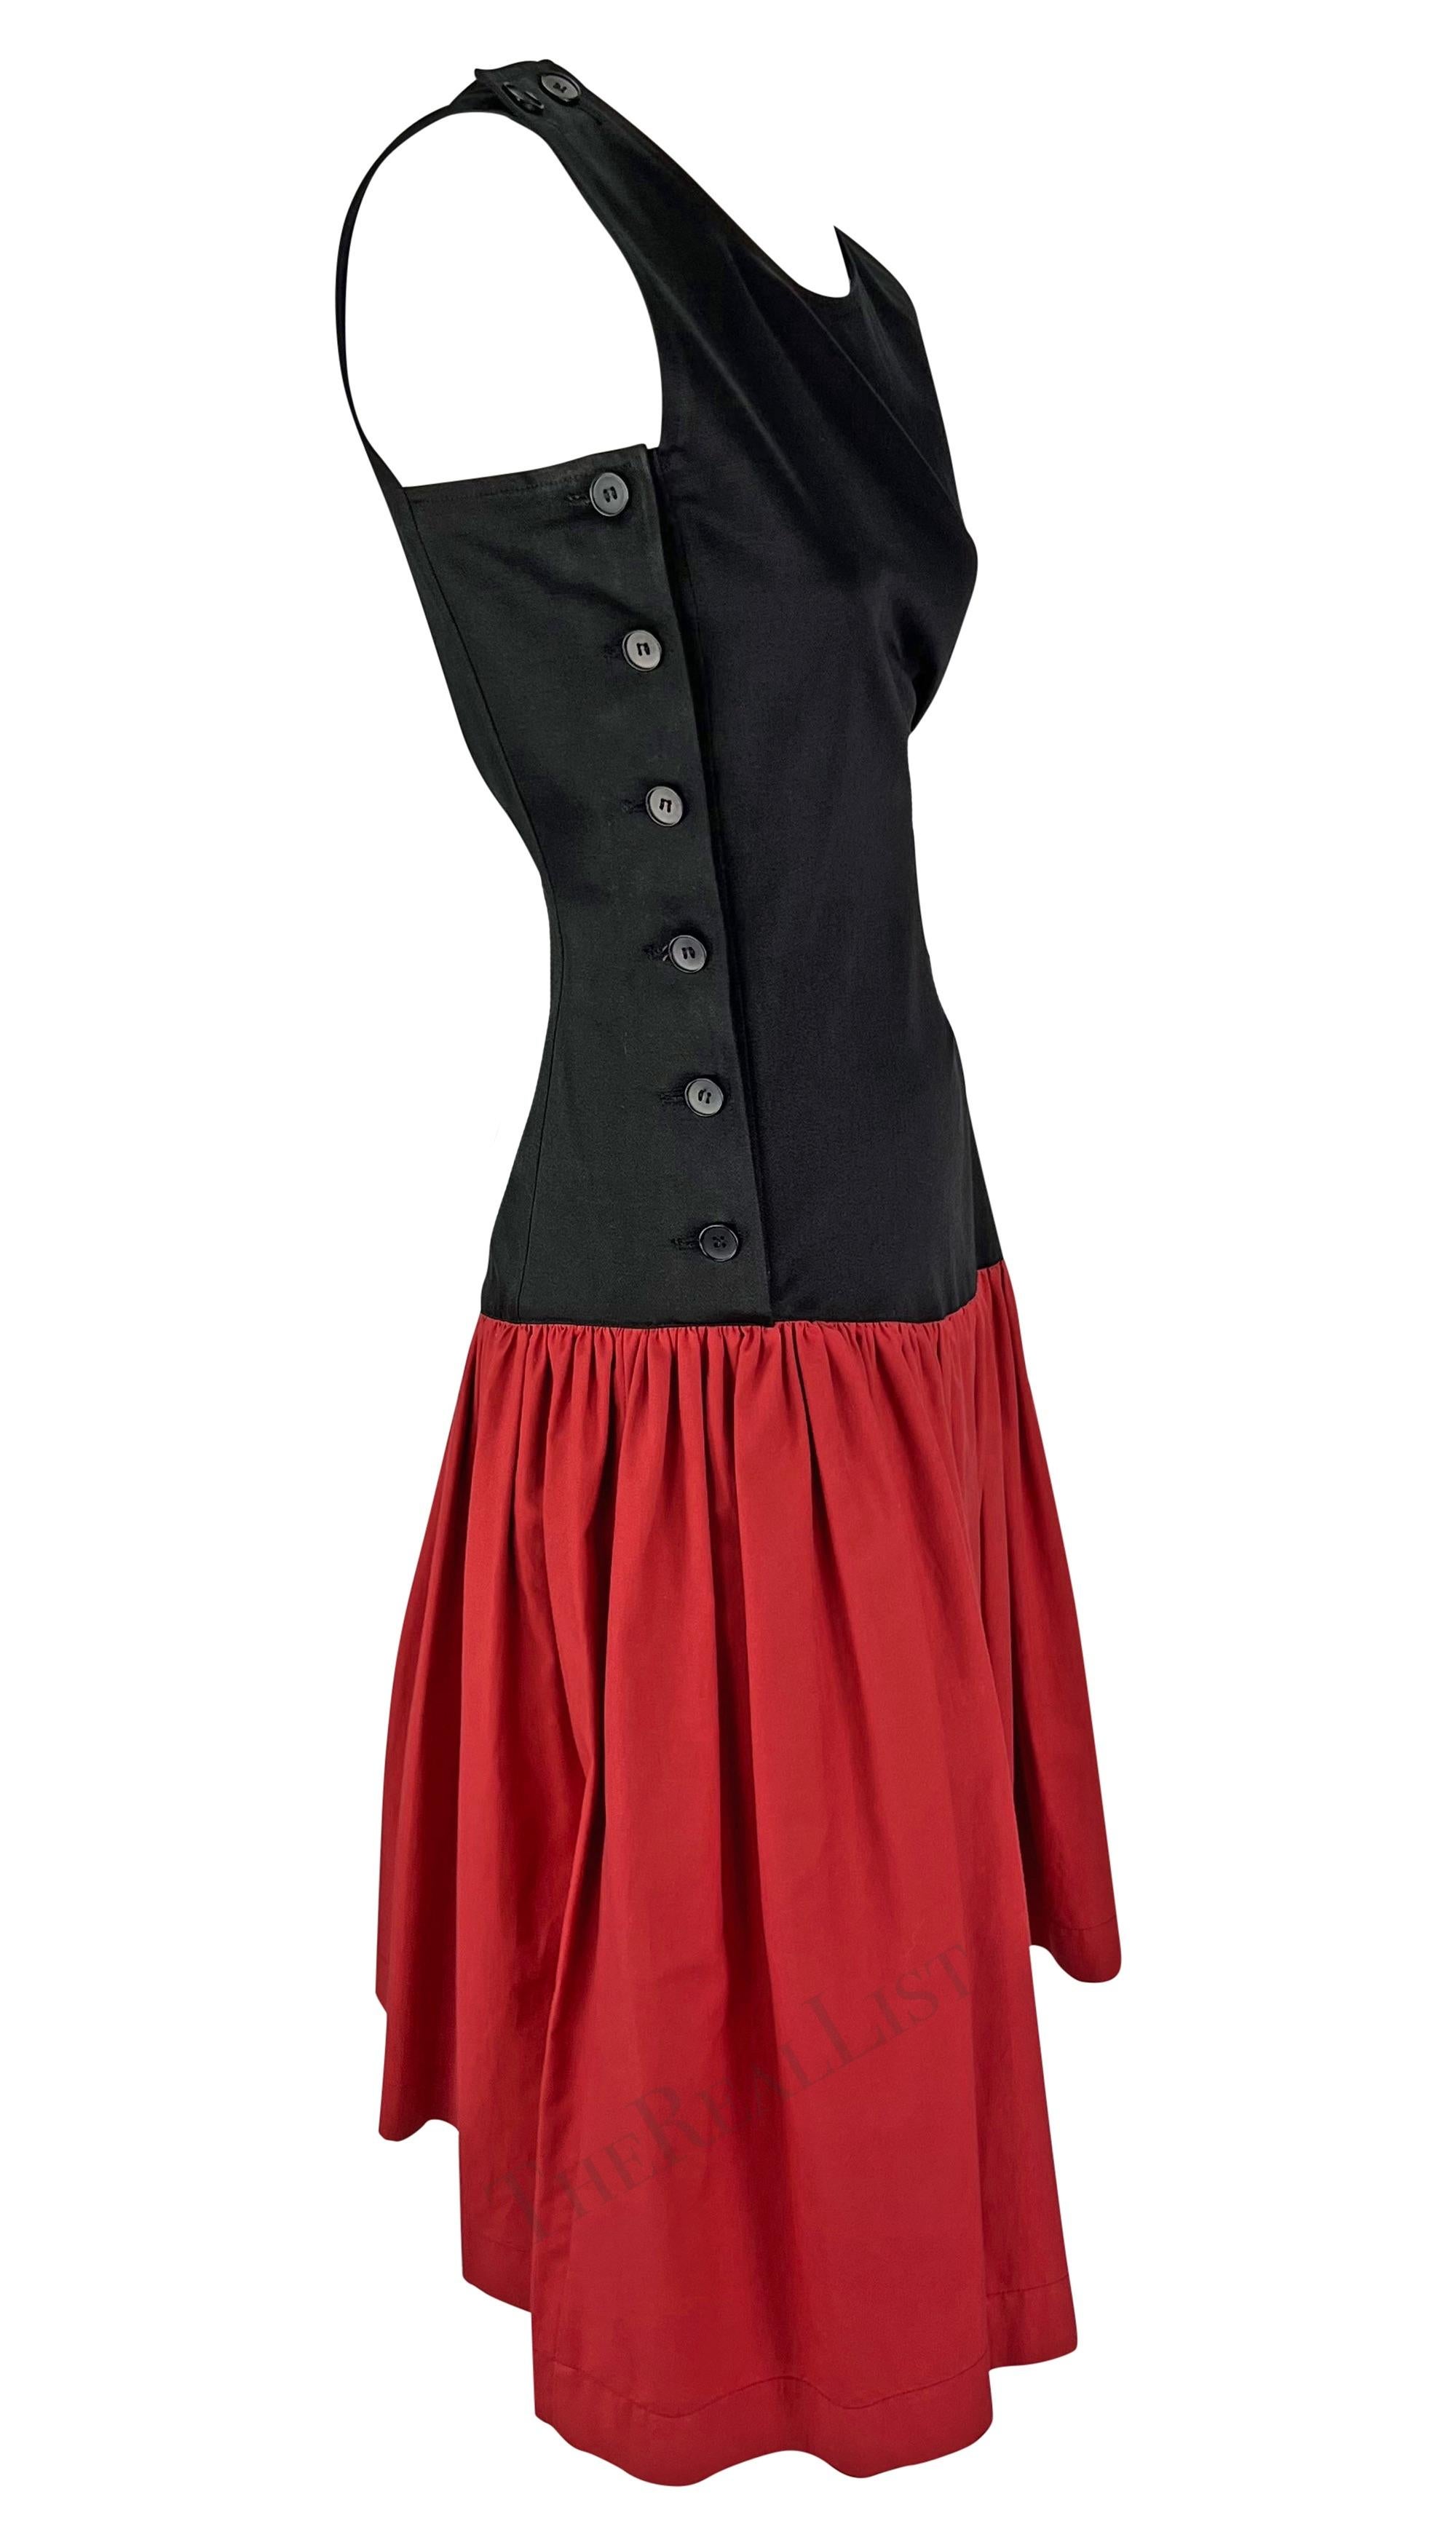 S/S 1983 Saint Laurent Rive Gauche Runway Ad Black Red Sleeveless Dress For Sale 4